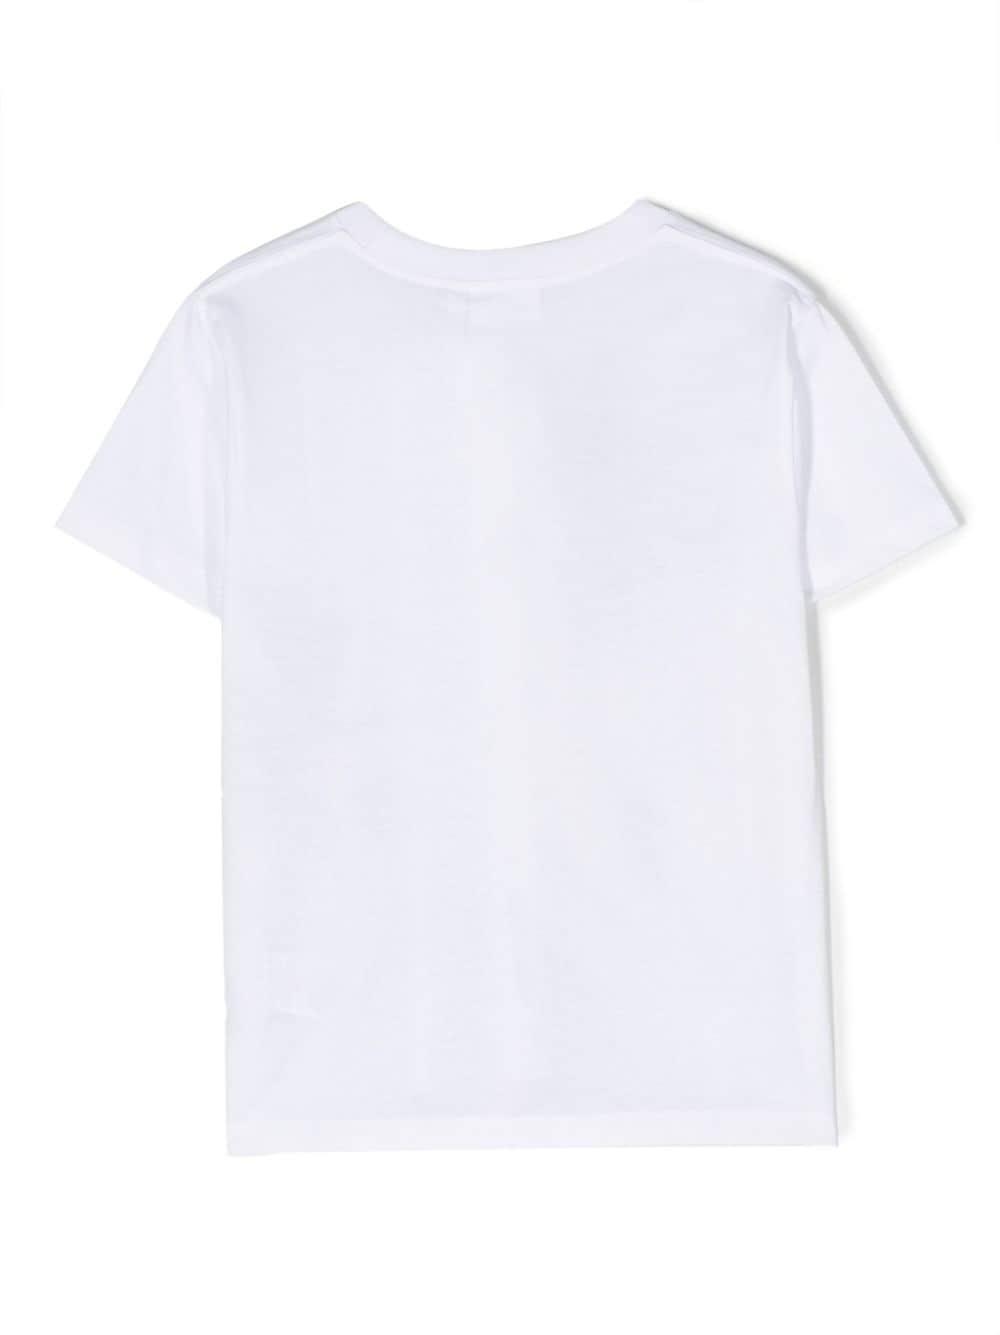 T.shirt bambino bianco/multicolore